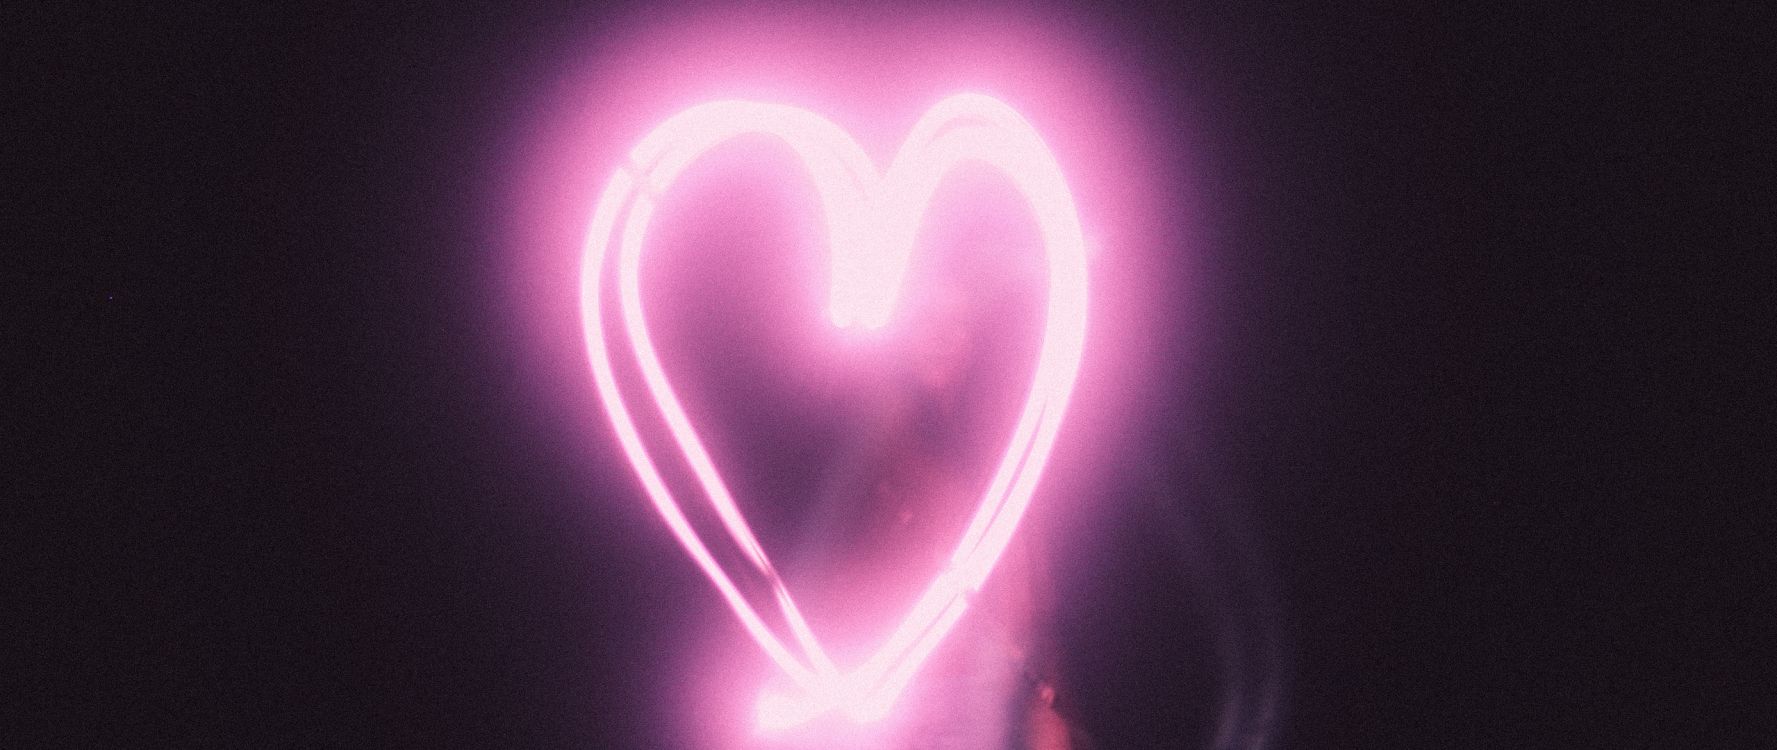 Light, Pink, Heart, Love, Neon. Wallpaper in 2560x1080 Resolution